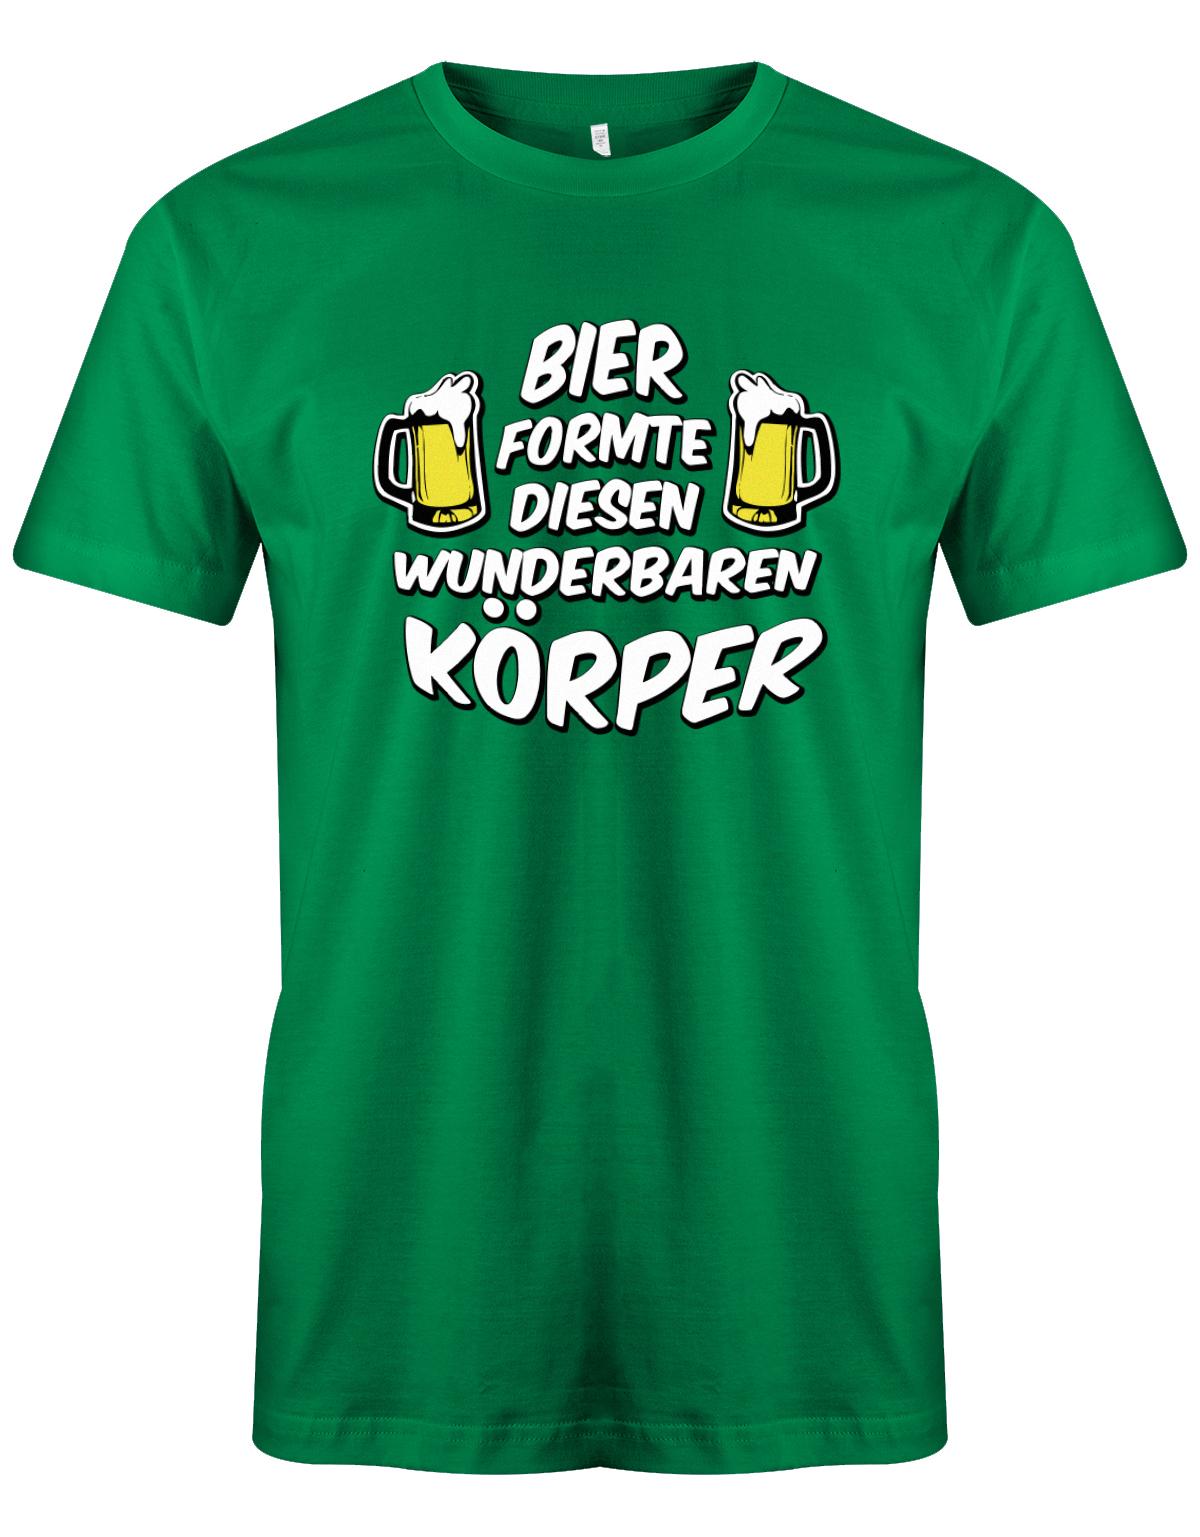 Bier-formte-dieses-wunderbaren-K-rper-Herren-Shirt-Gr-n